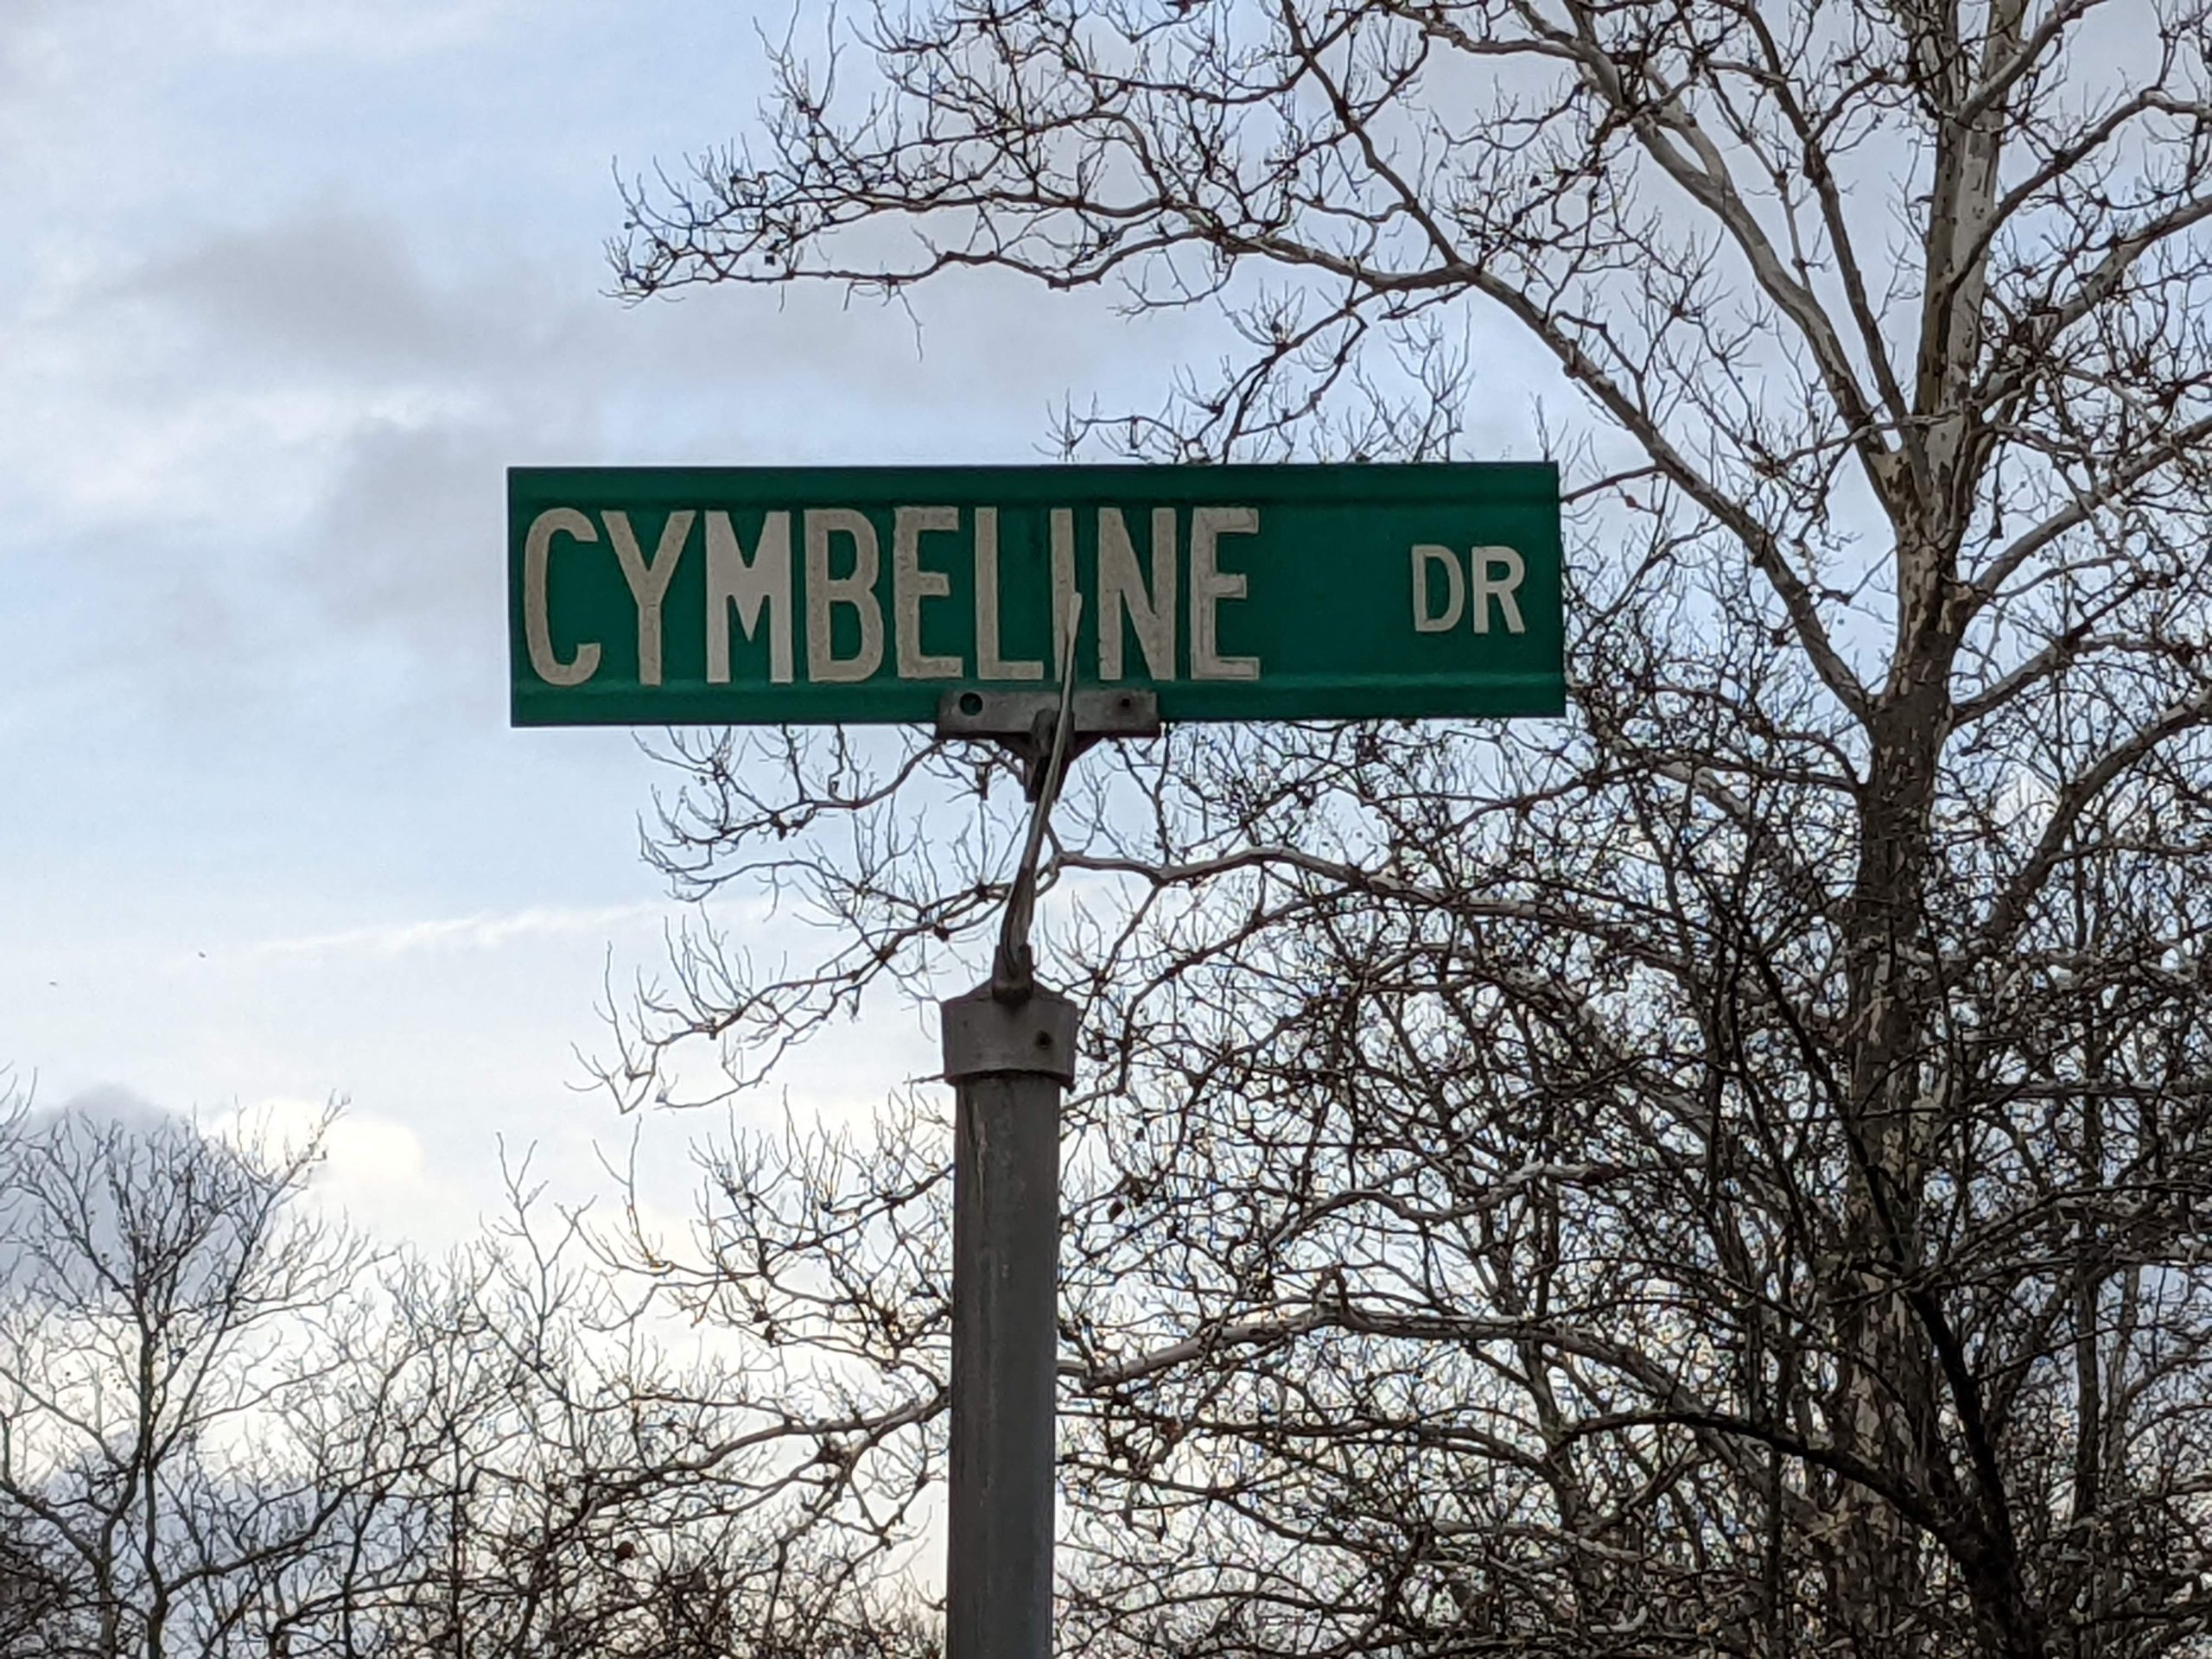 Street sign: Cymbeline Dr.